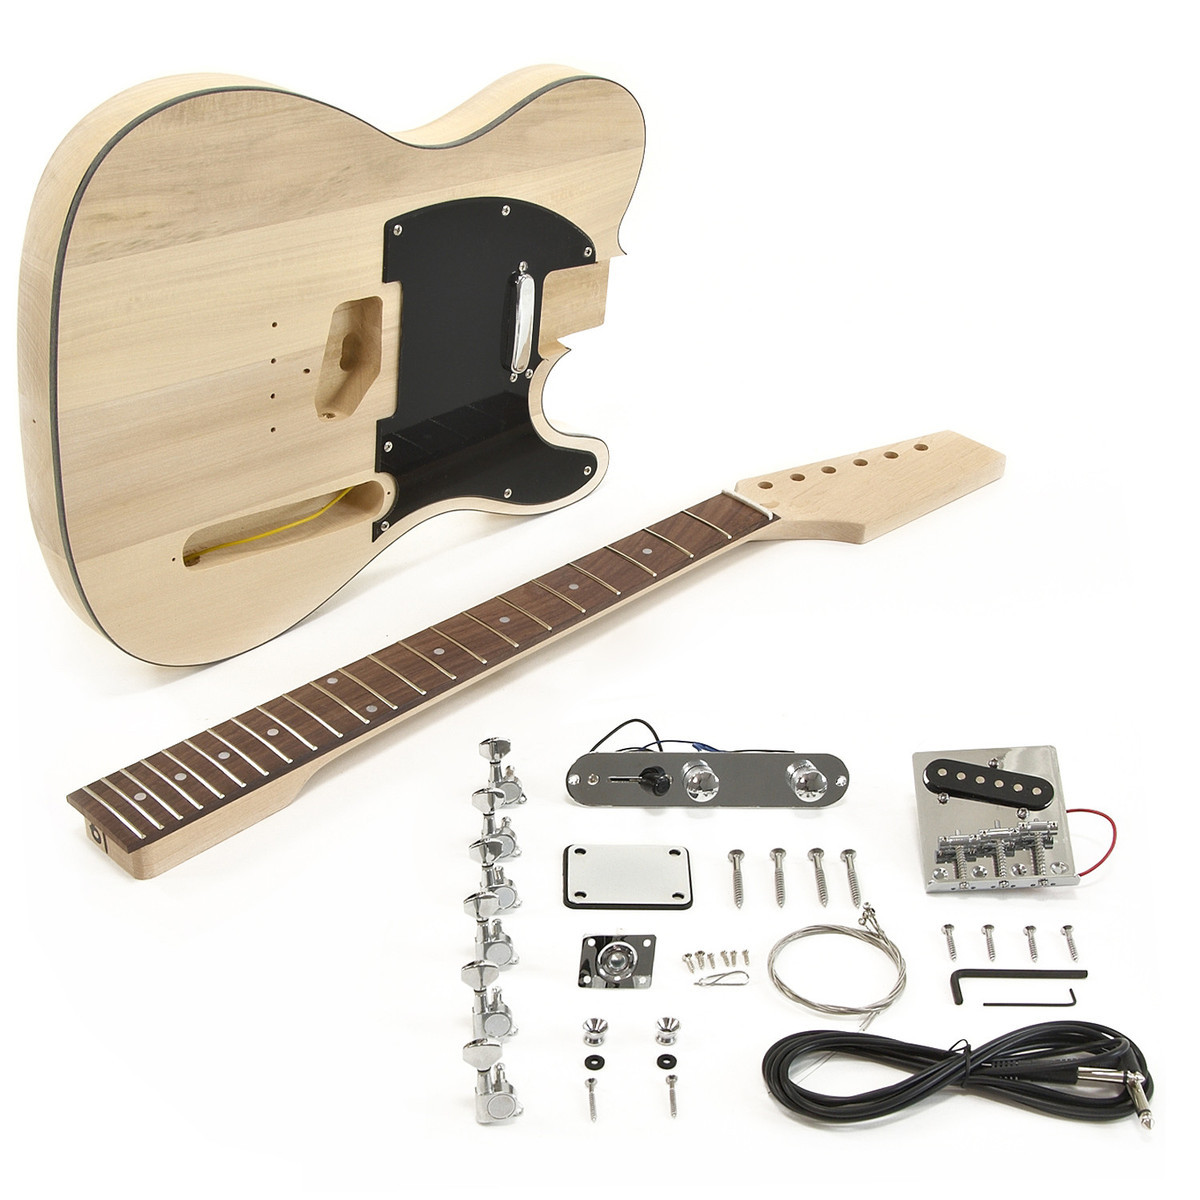 DIY Electric Guitar Kits
 Knoxville Electric Guitar DIY Kit at Gear4music